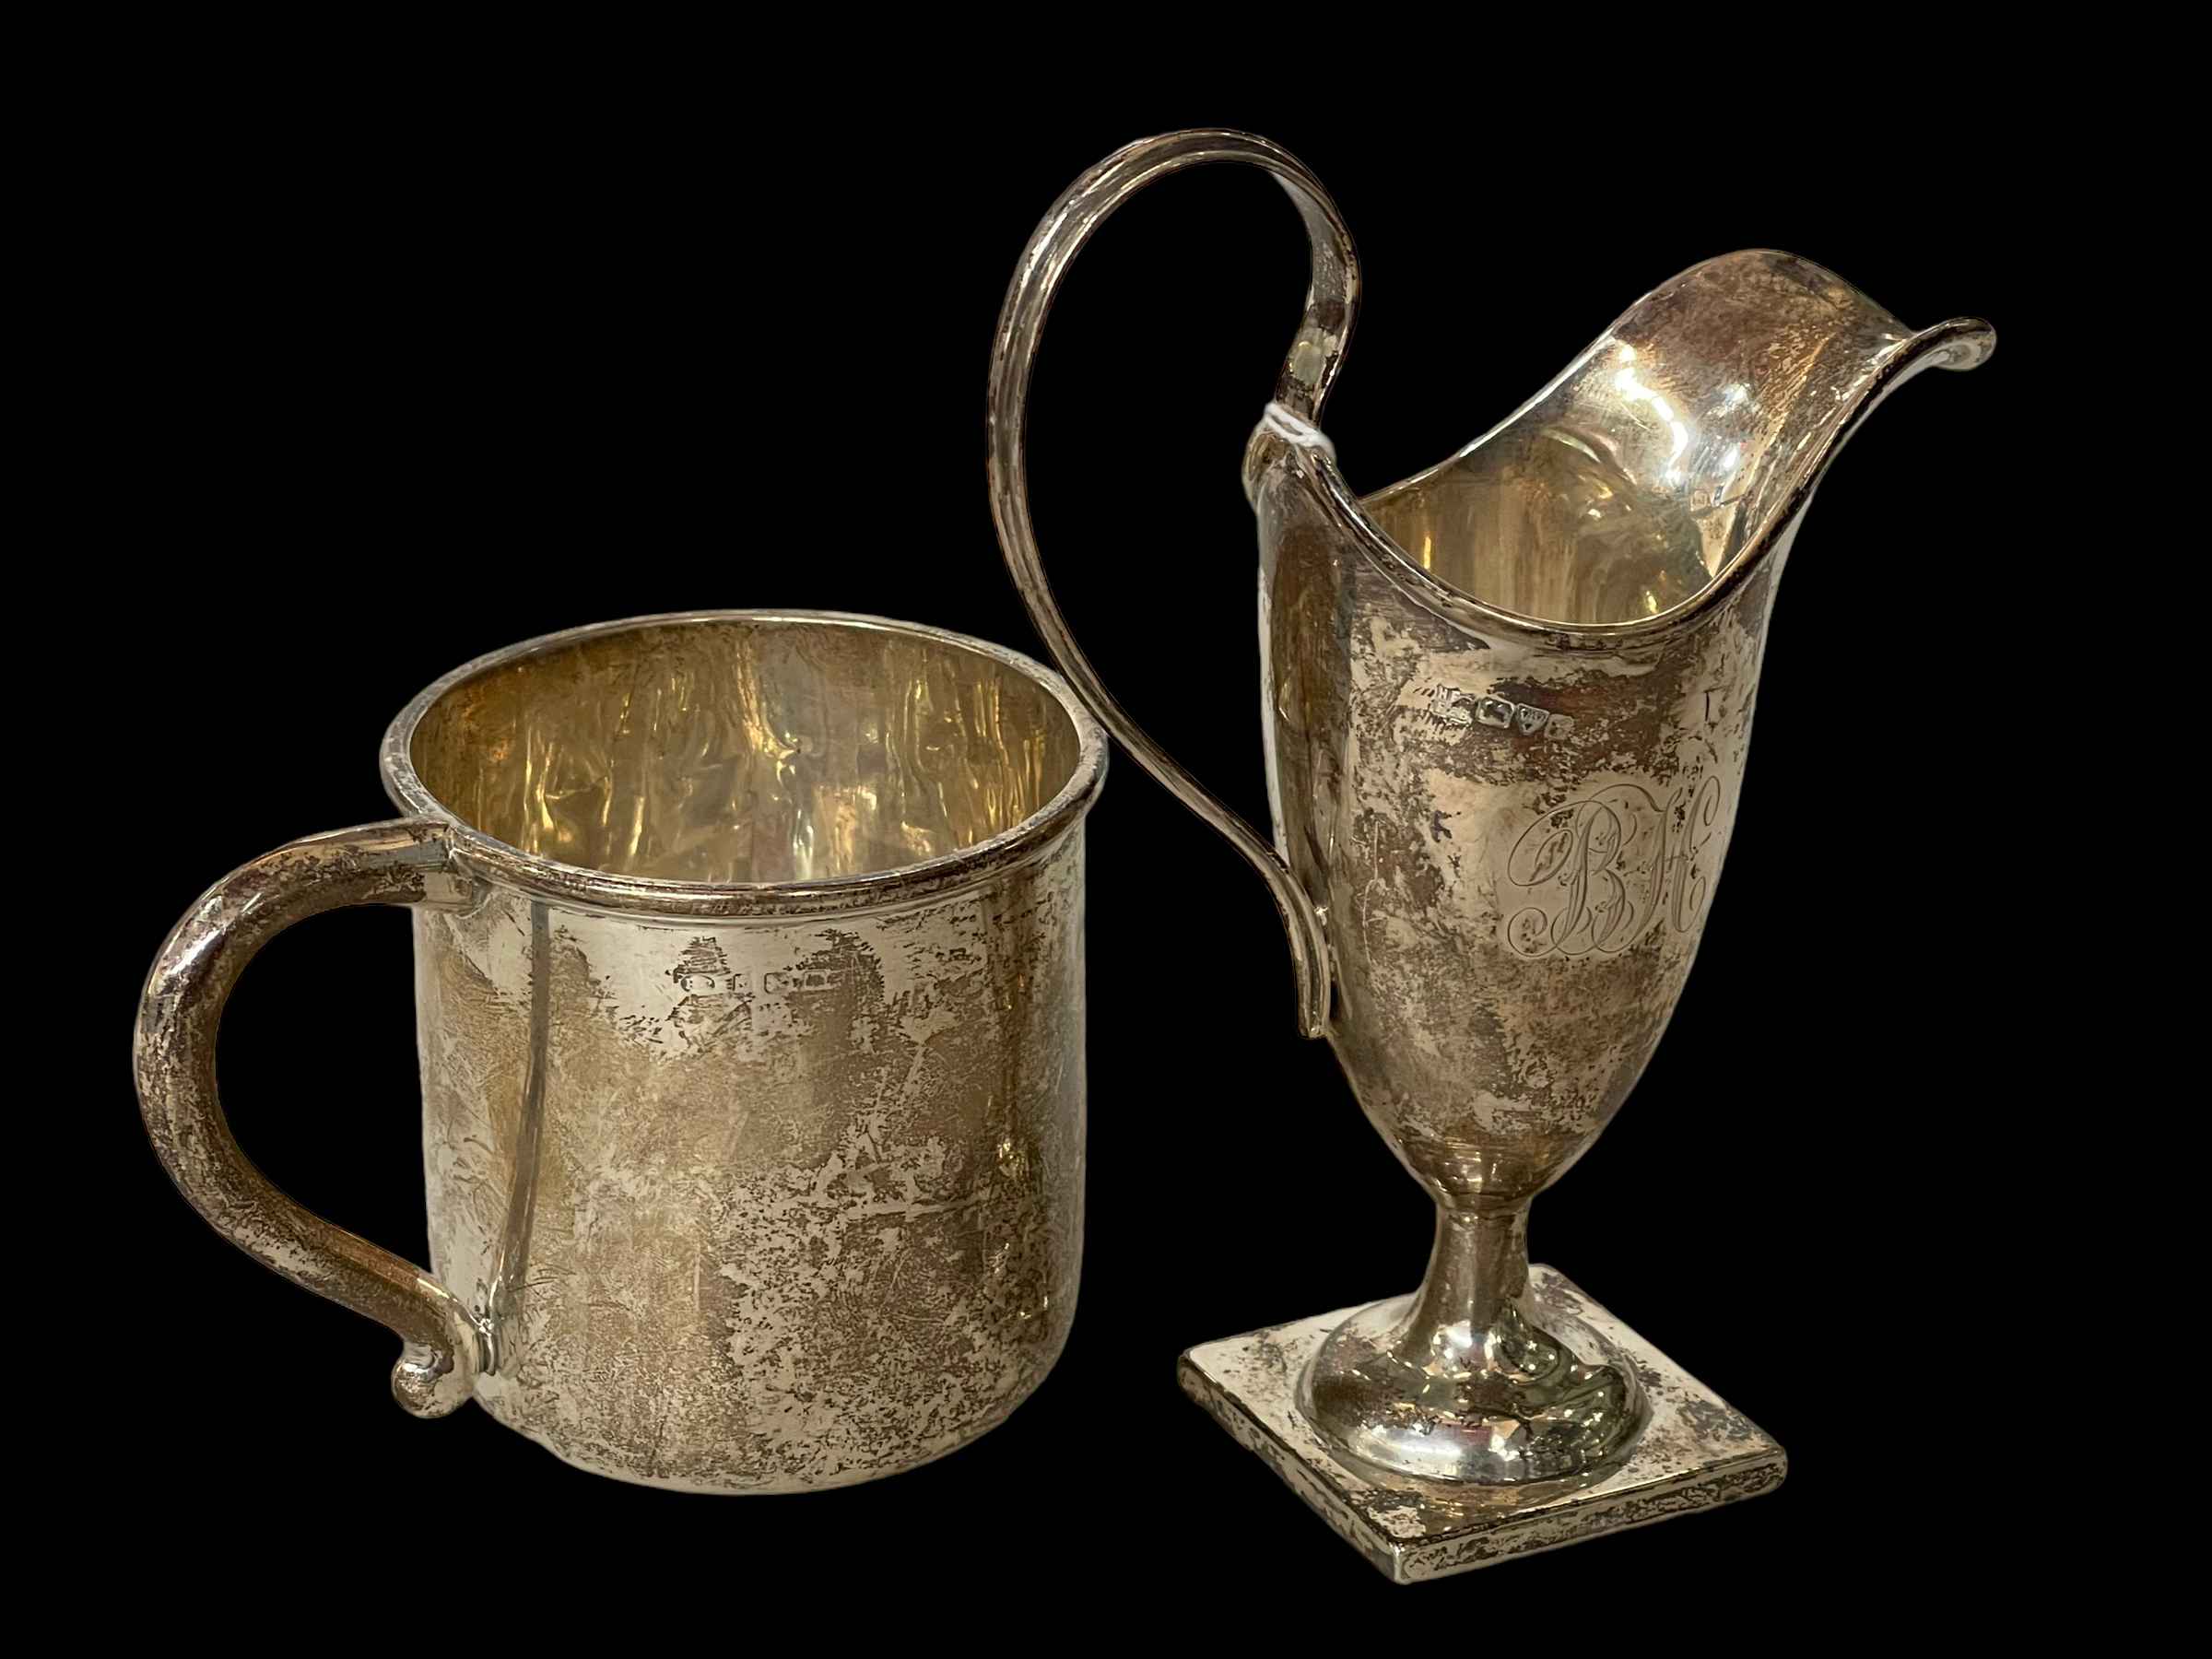 Chester hallmarked helmet cream jug 1907 and silver christening mug (2).